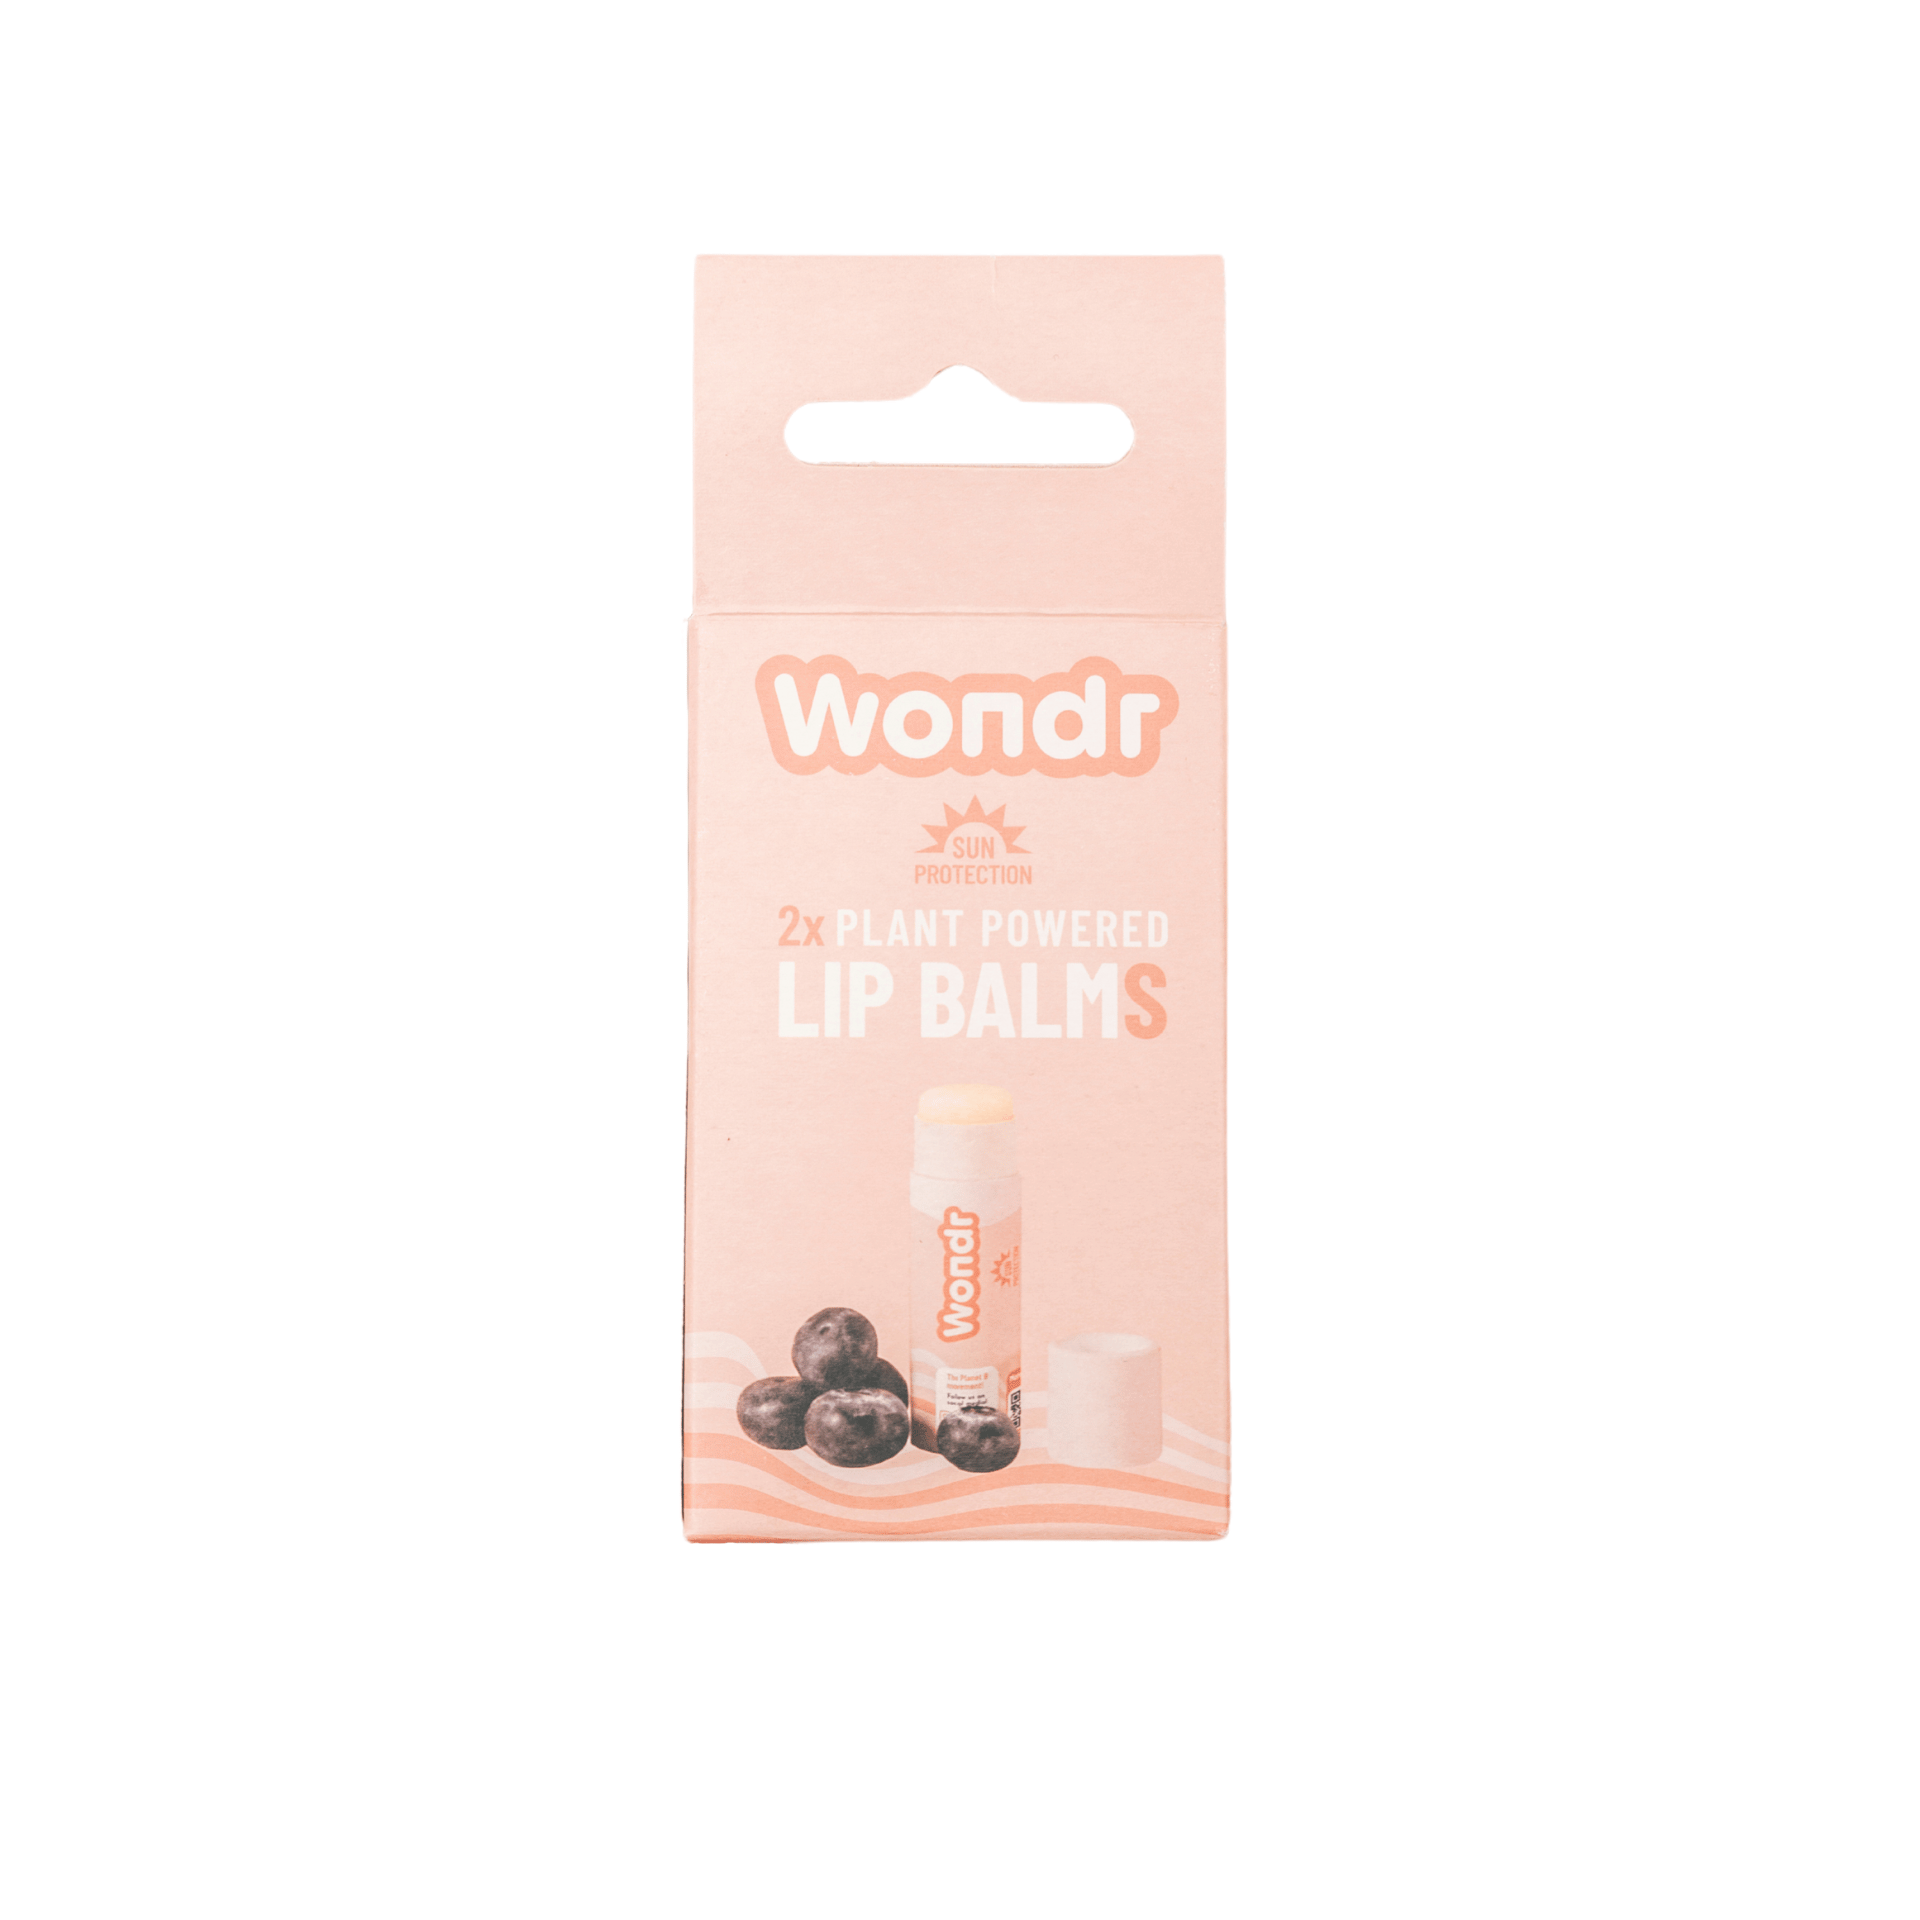 Wondr Plant Powered Lip Balm Duo 2x4g